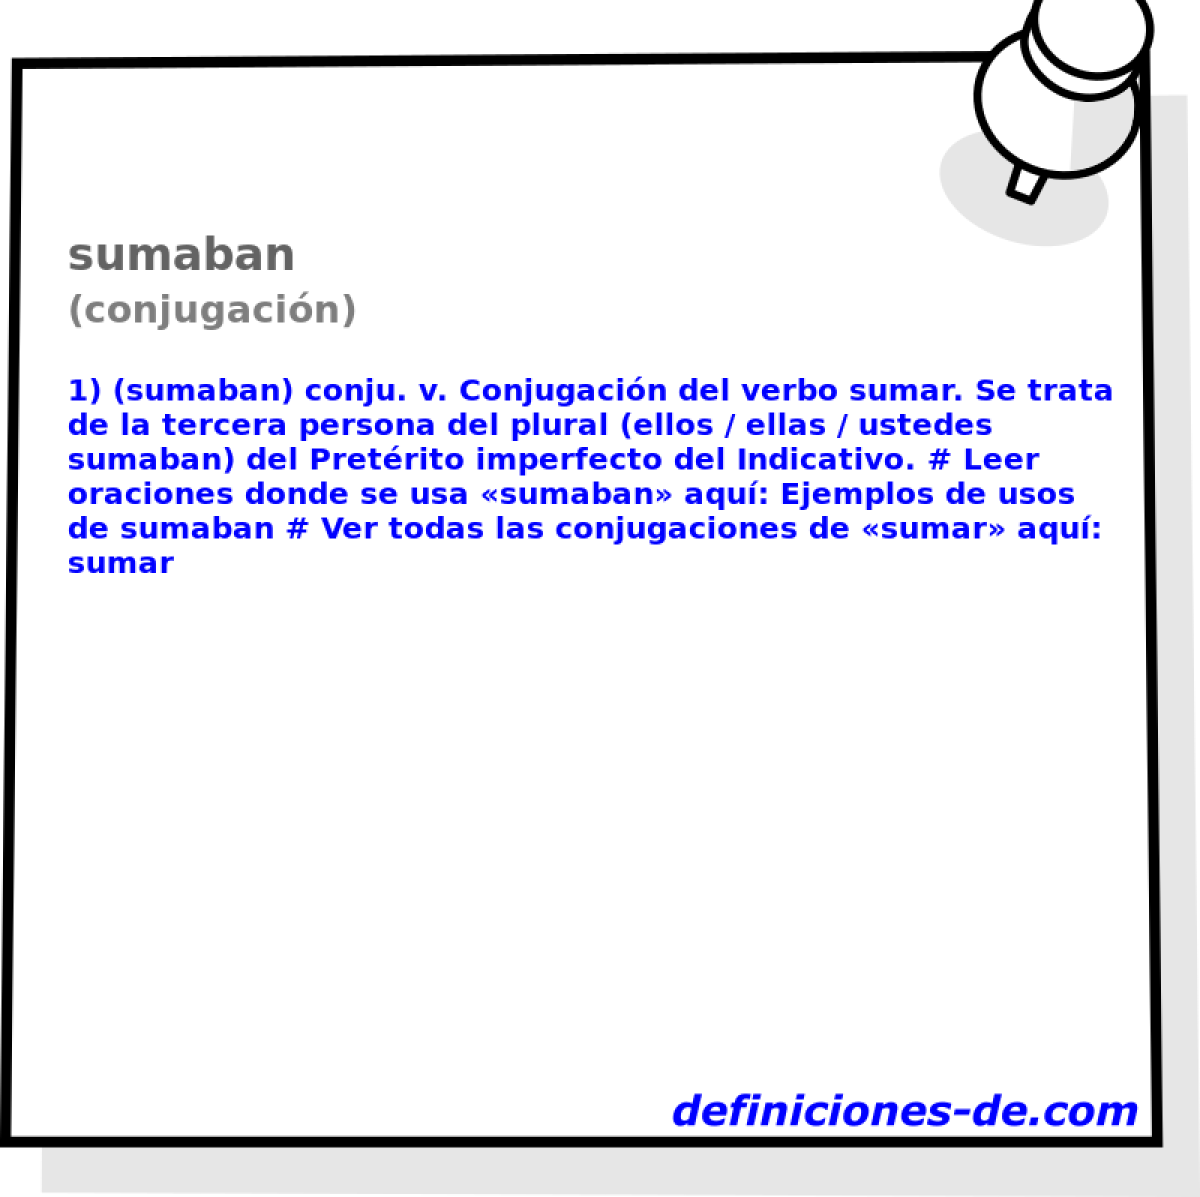 sumaban (conjugacin)